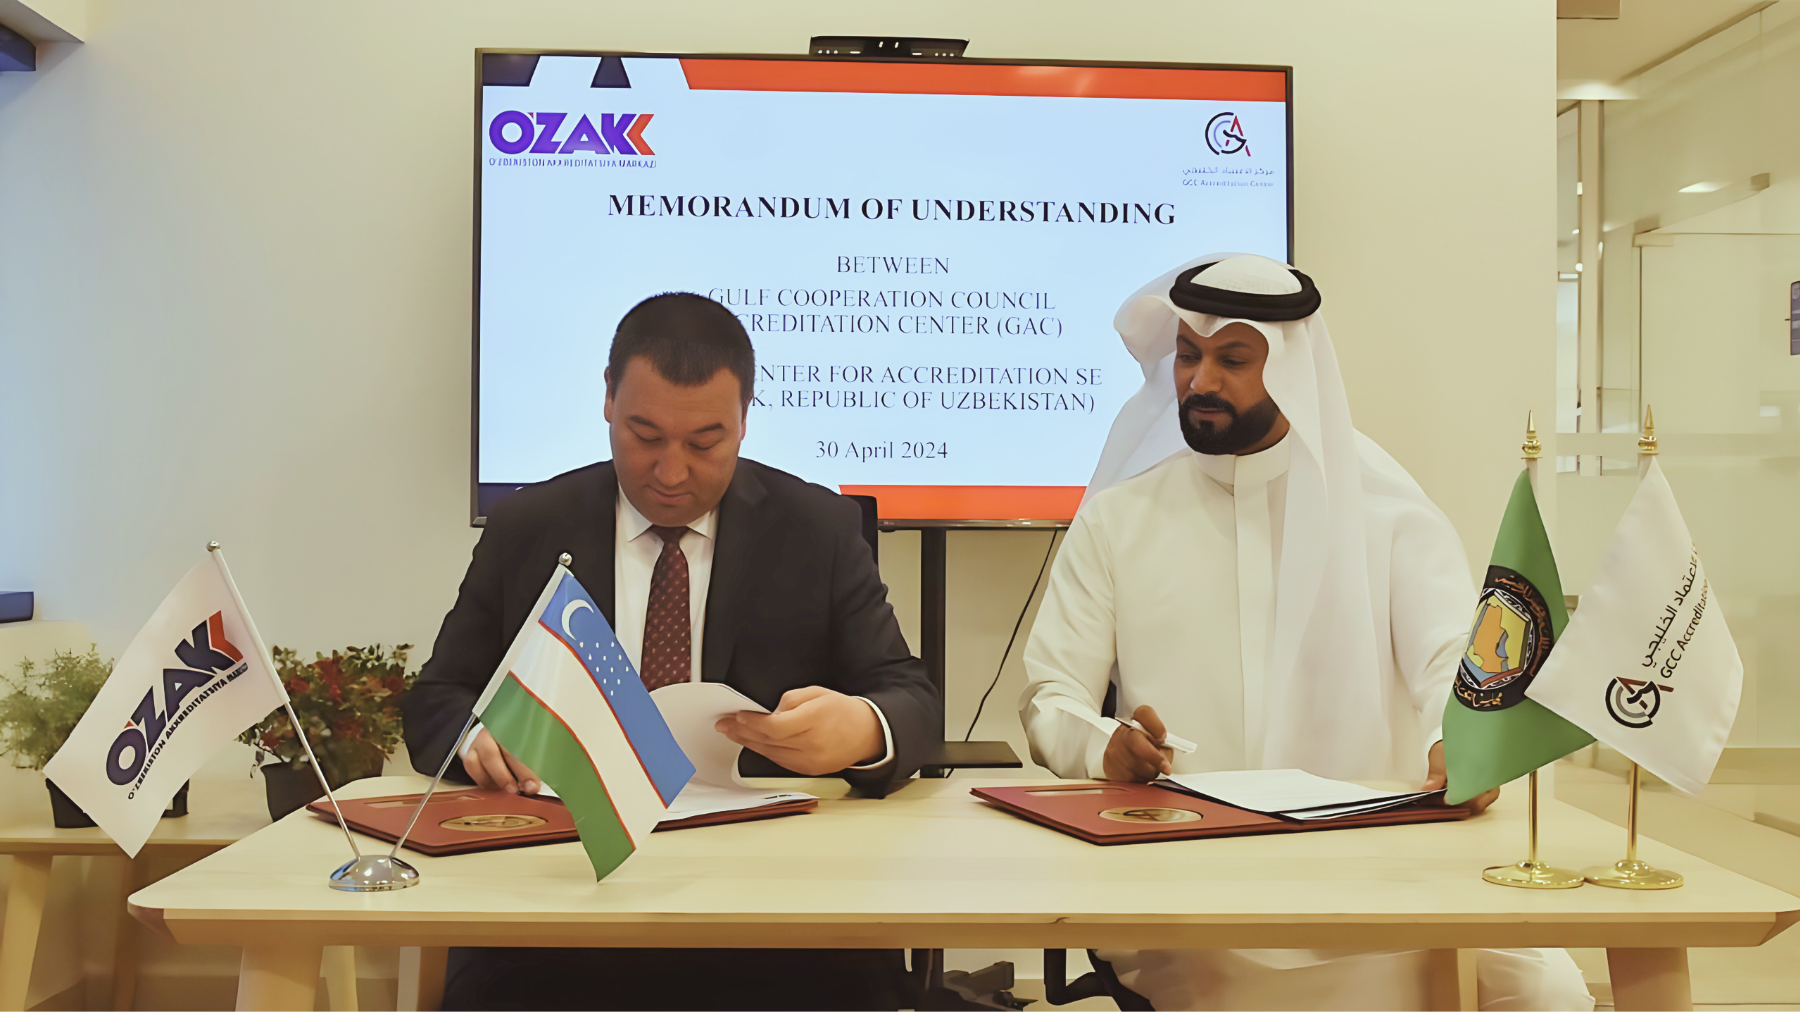 GAC Signs MOU with Uzbekistan’s Accreditation Center (O’ZAKK)